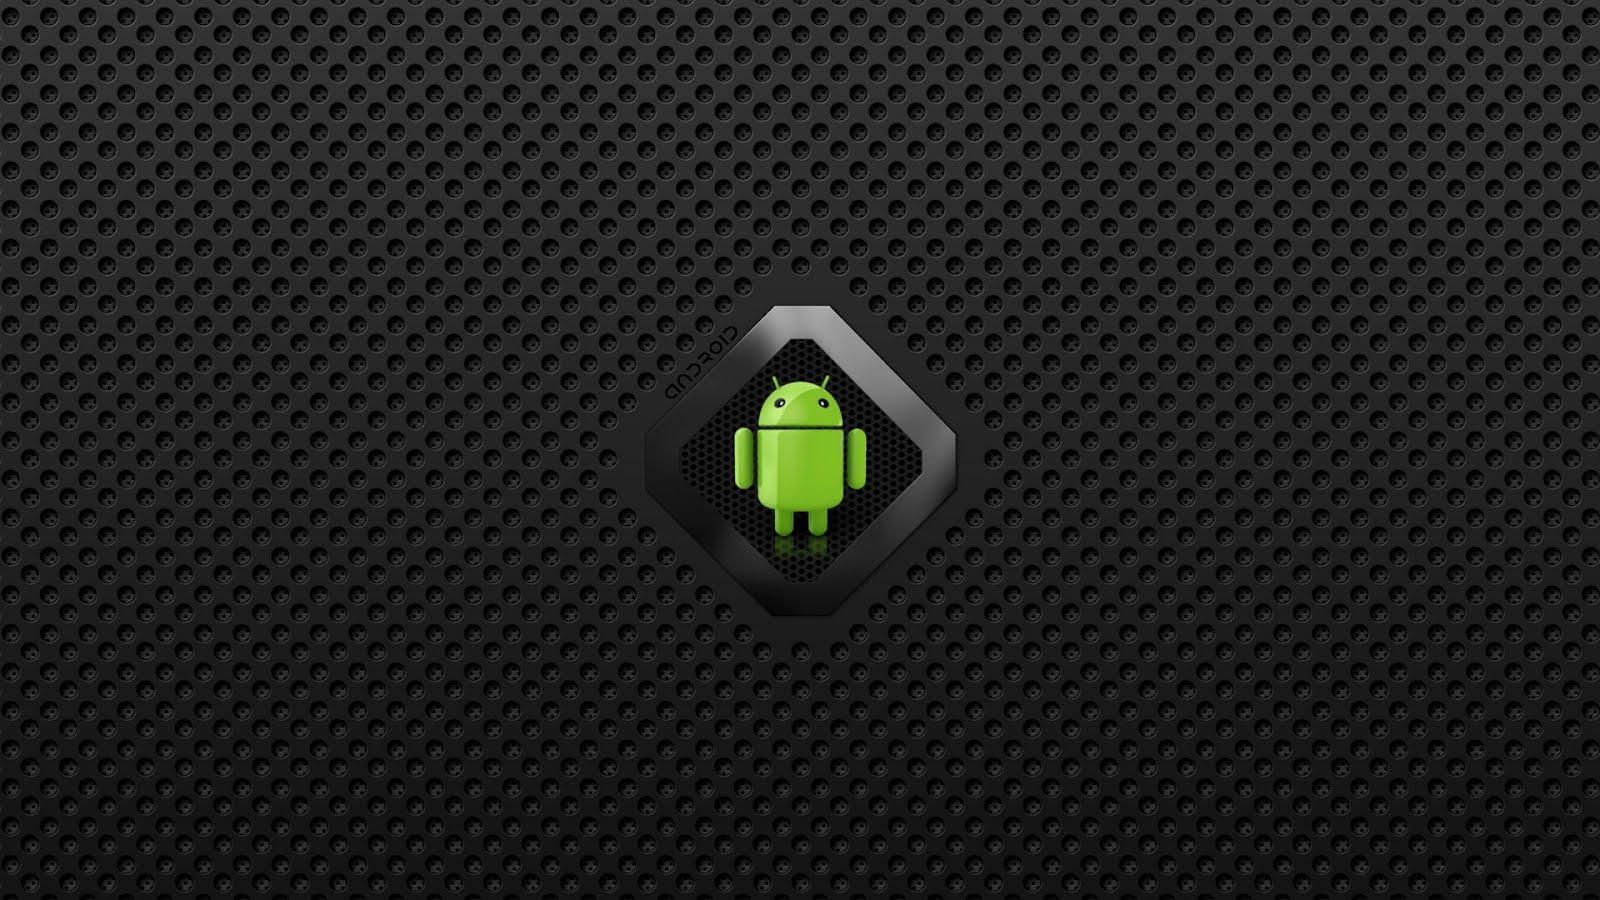 Free Wallpaper 1920x1080 HDTV: Google Android logo